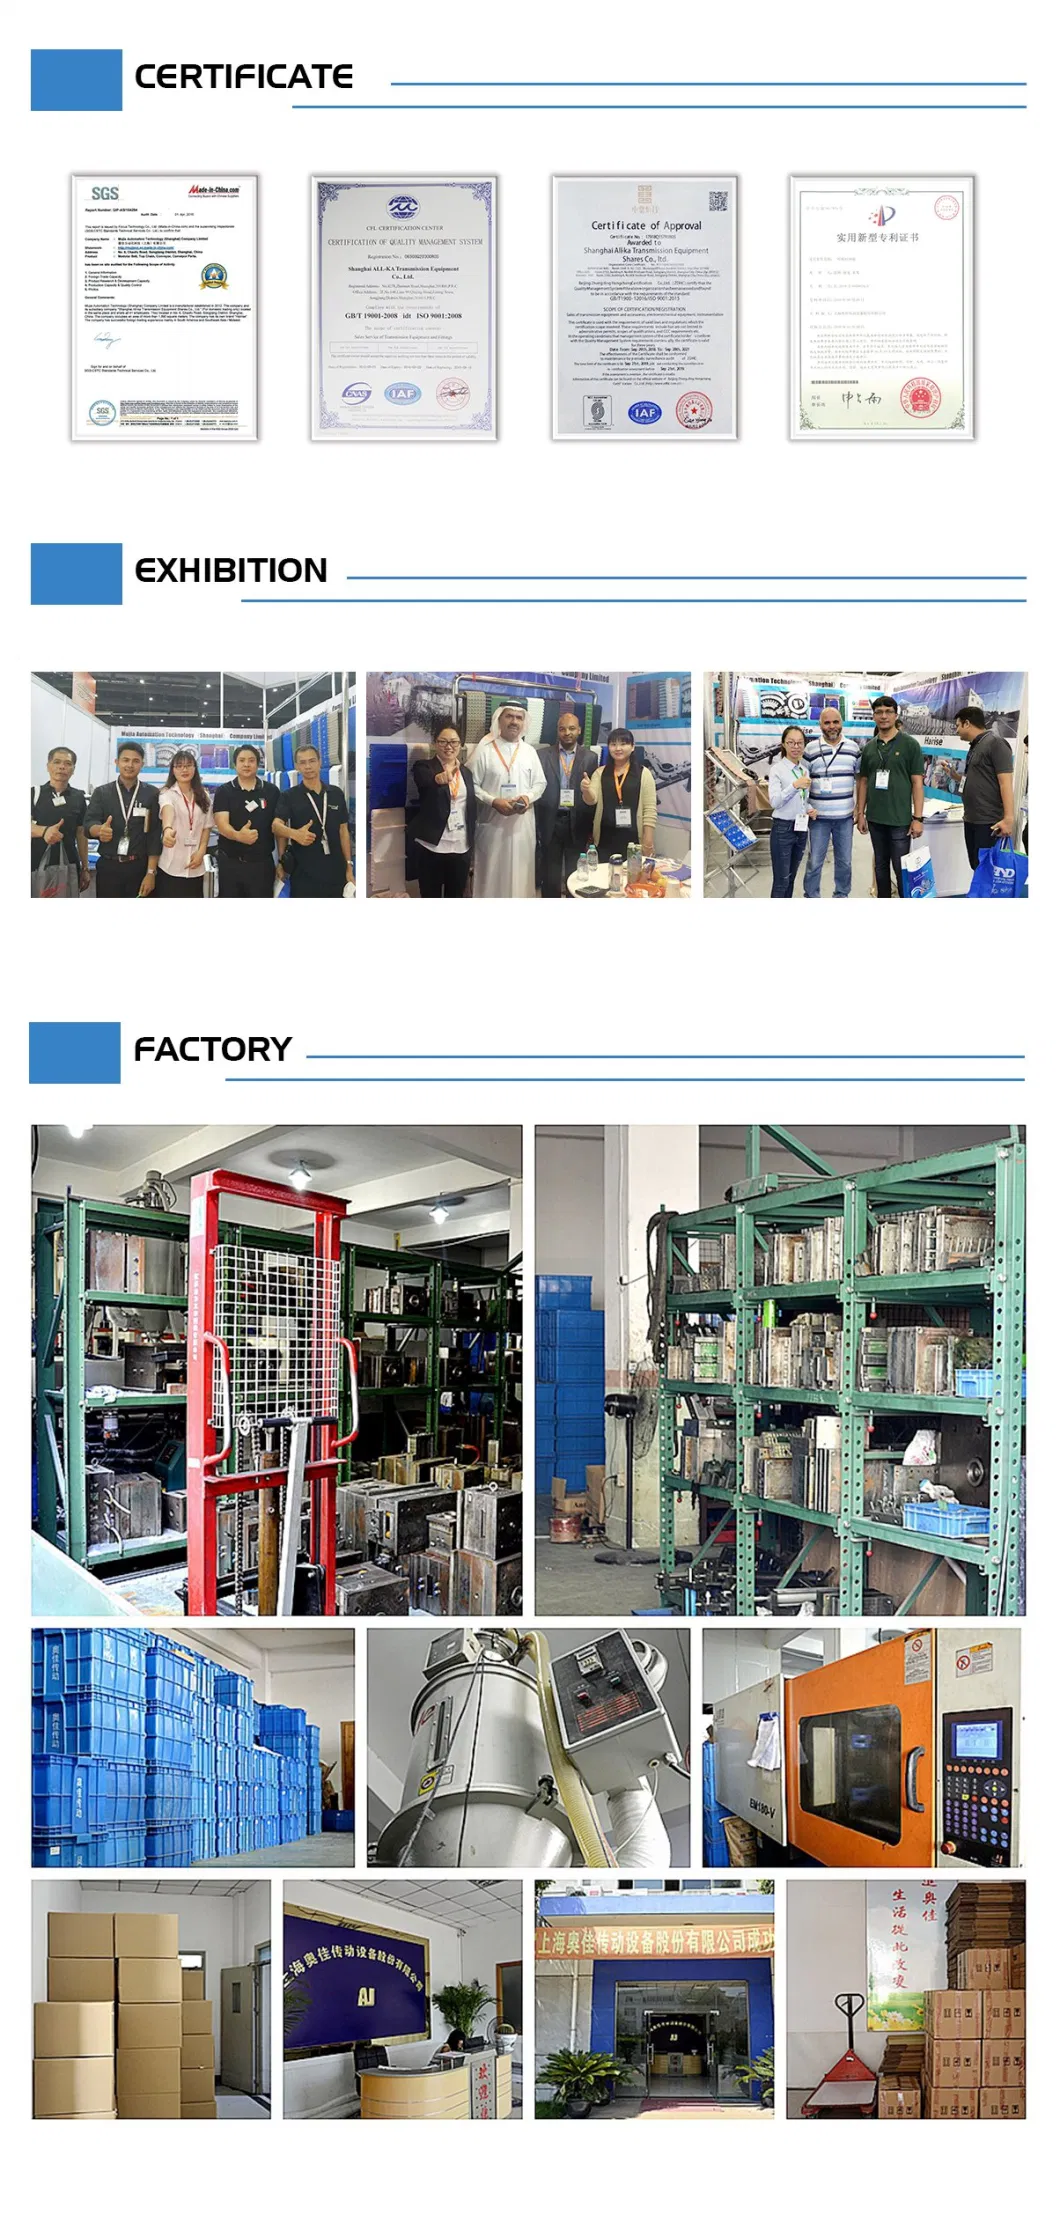 Har6100 Raised Rib Factory Manufacture Various Modular Belt Conveyor Wtih ISO Certificate